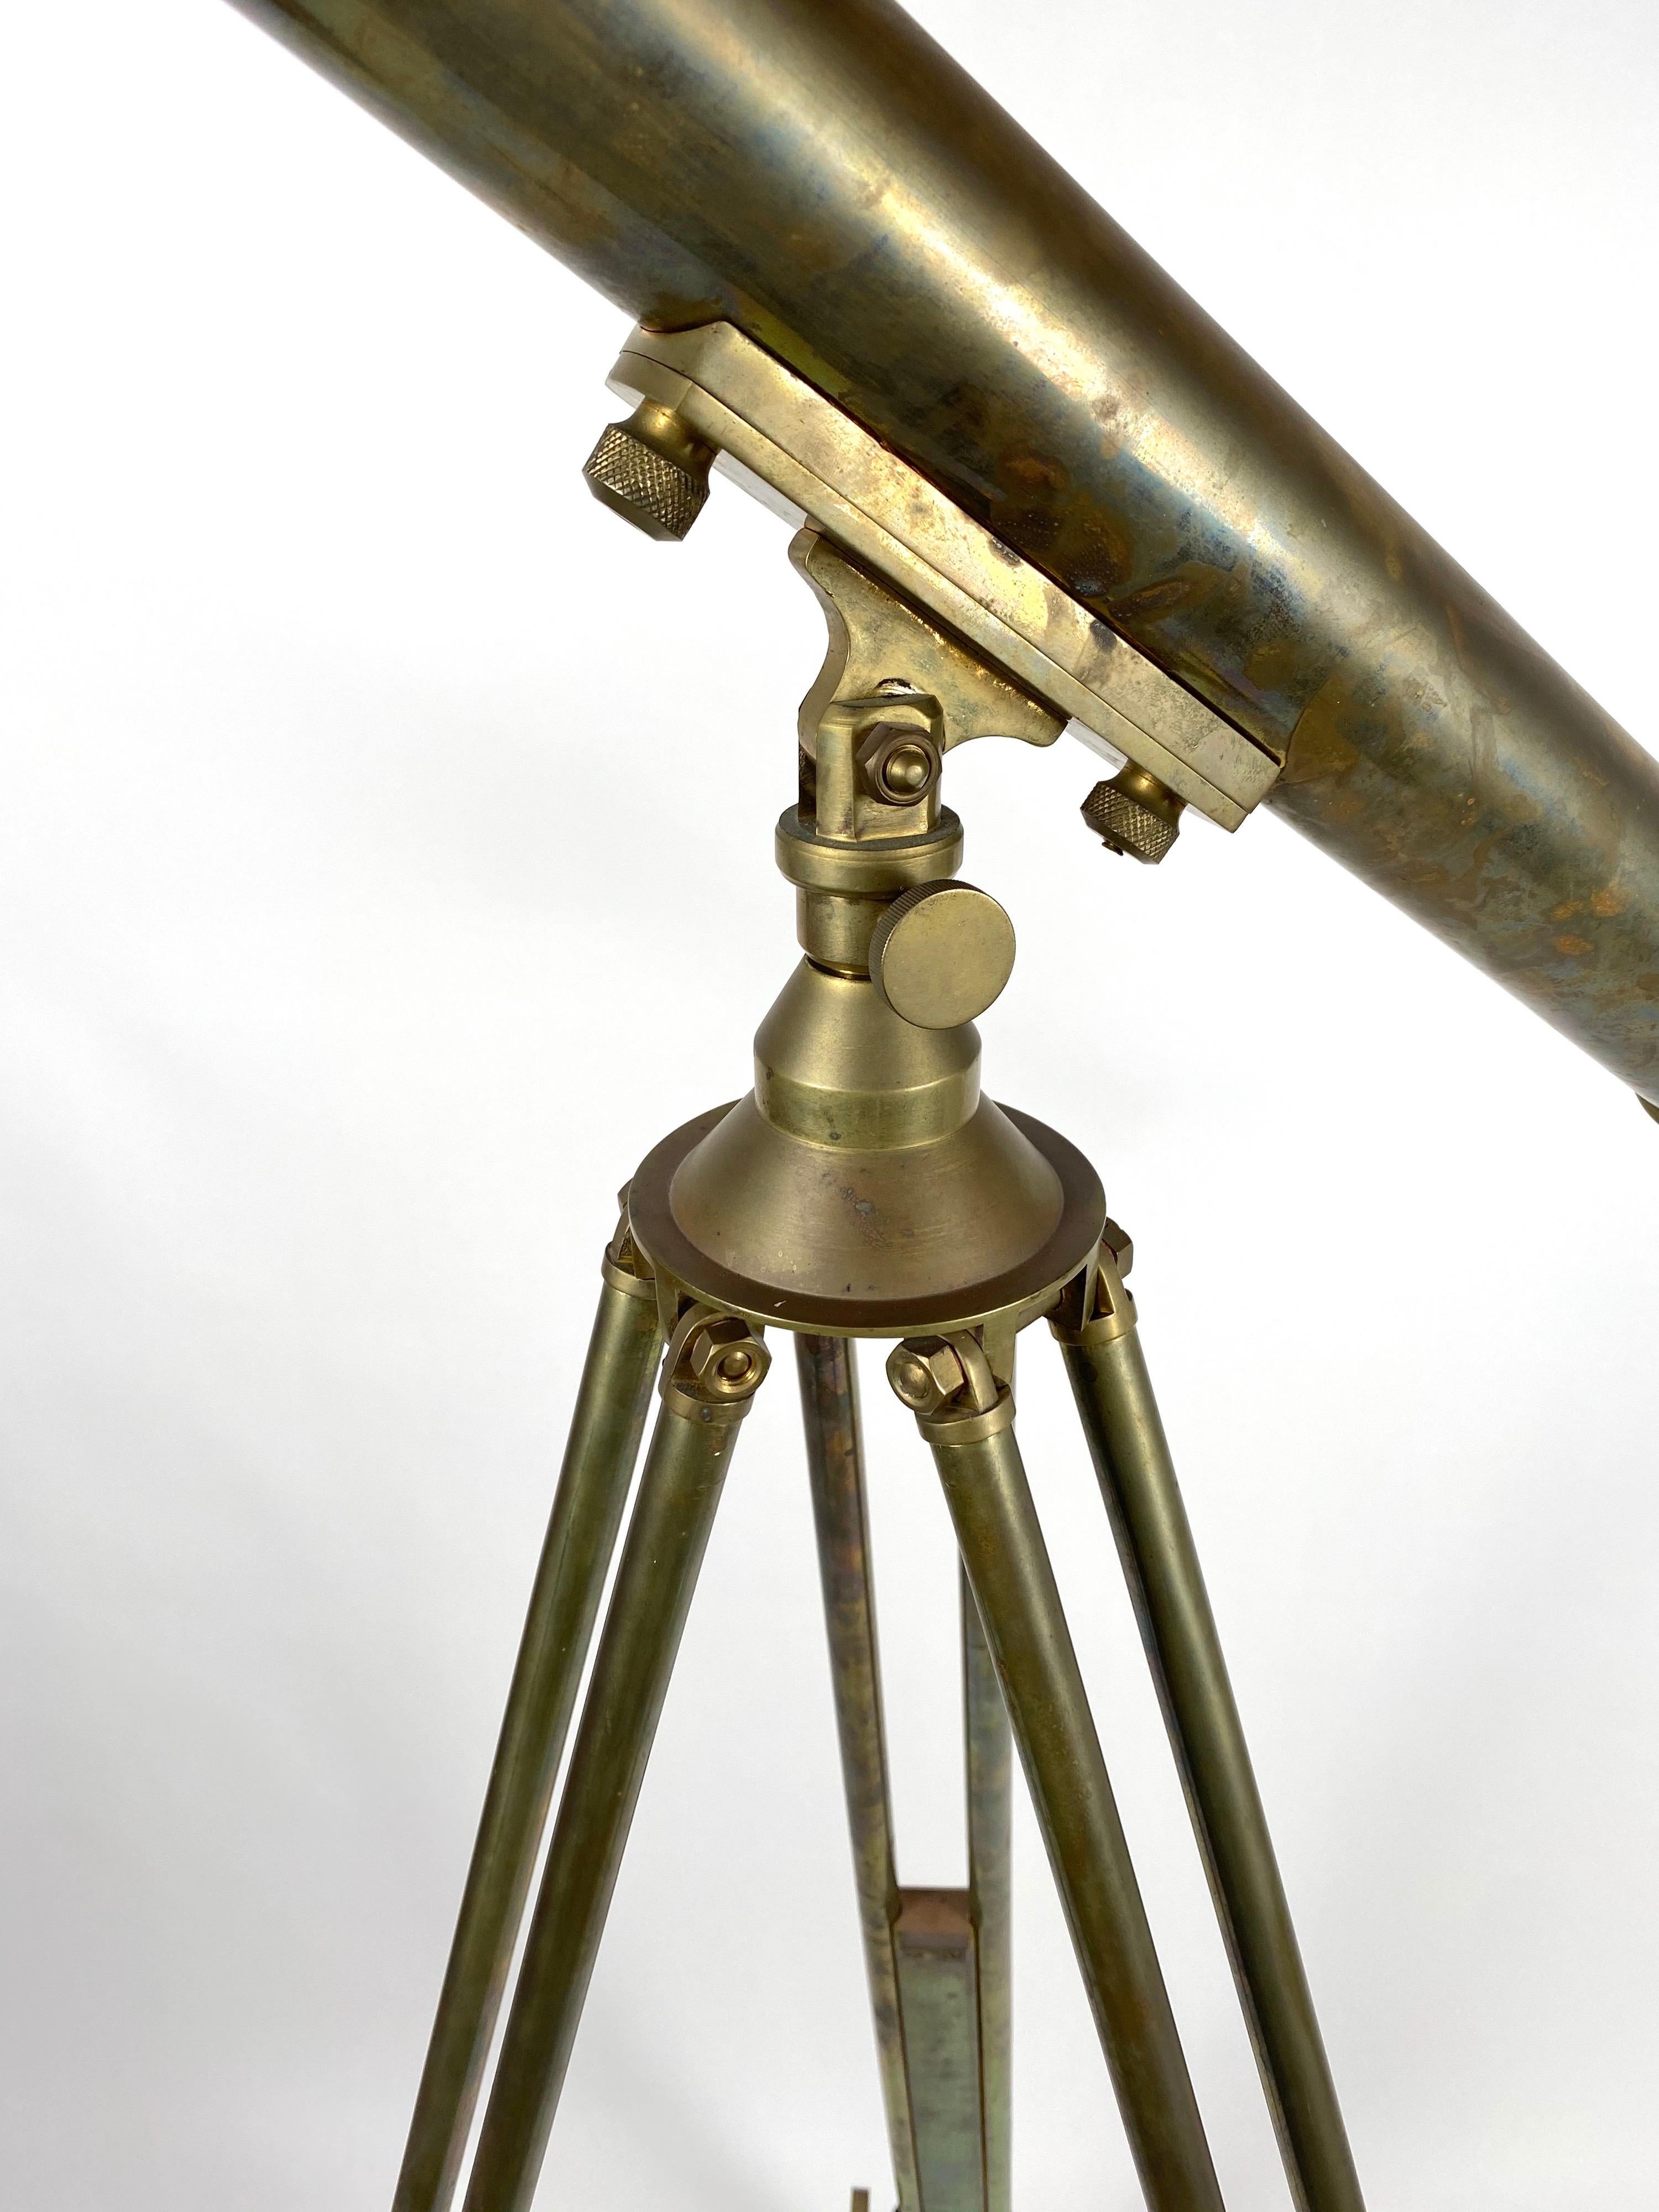 Brass telescope on tripod

Measures: 54